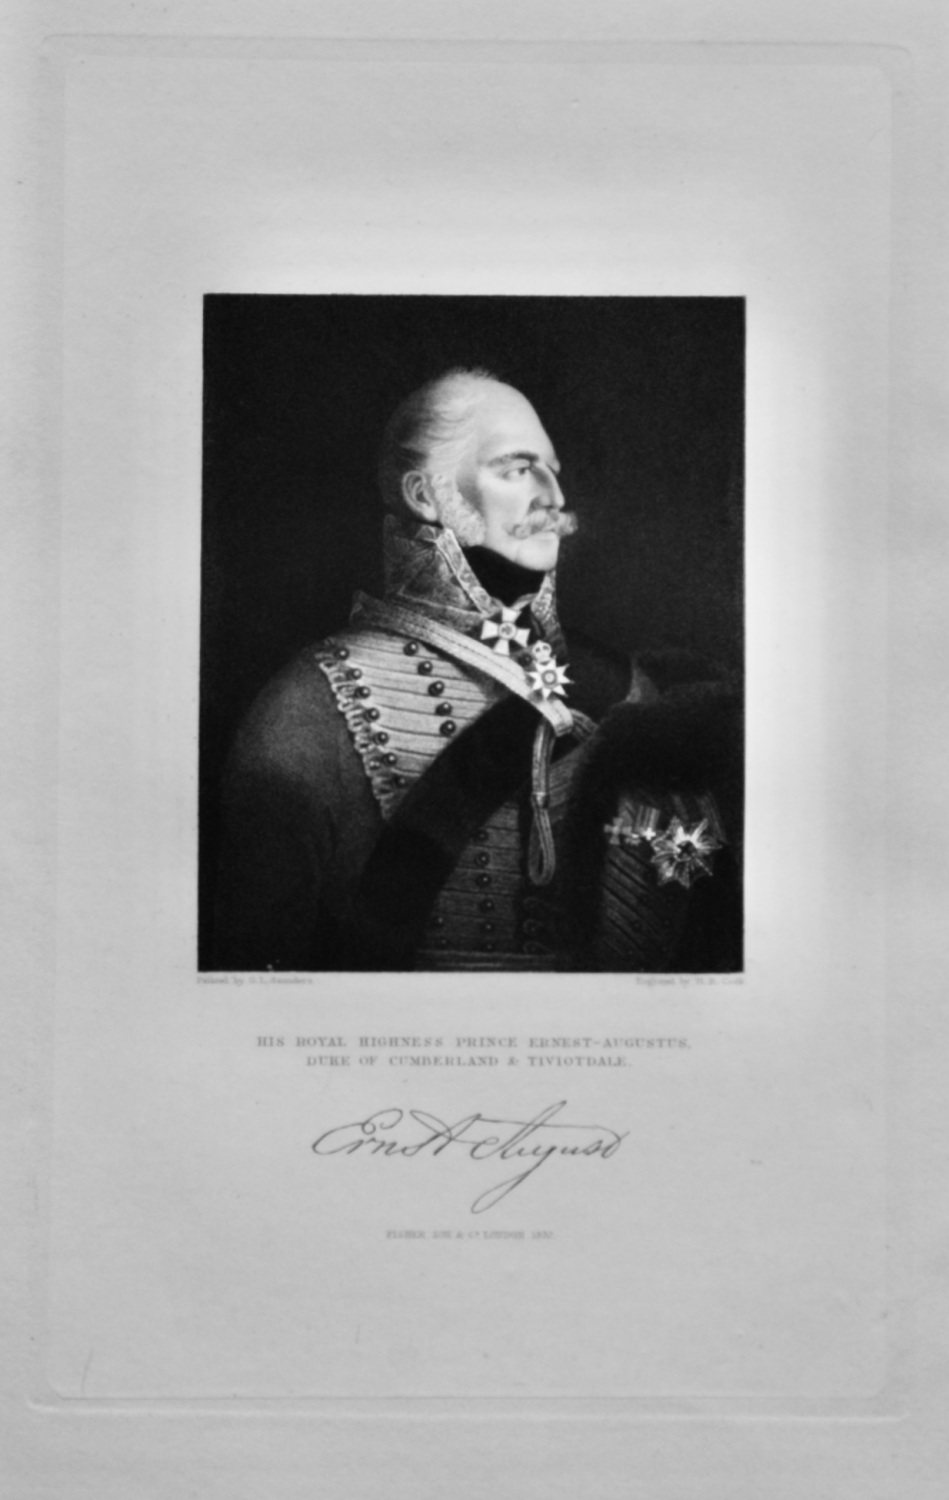 His Royal Highness Prince Ernest-Augustus, Duke of Cumberland & Tiviotdale.